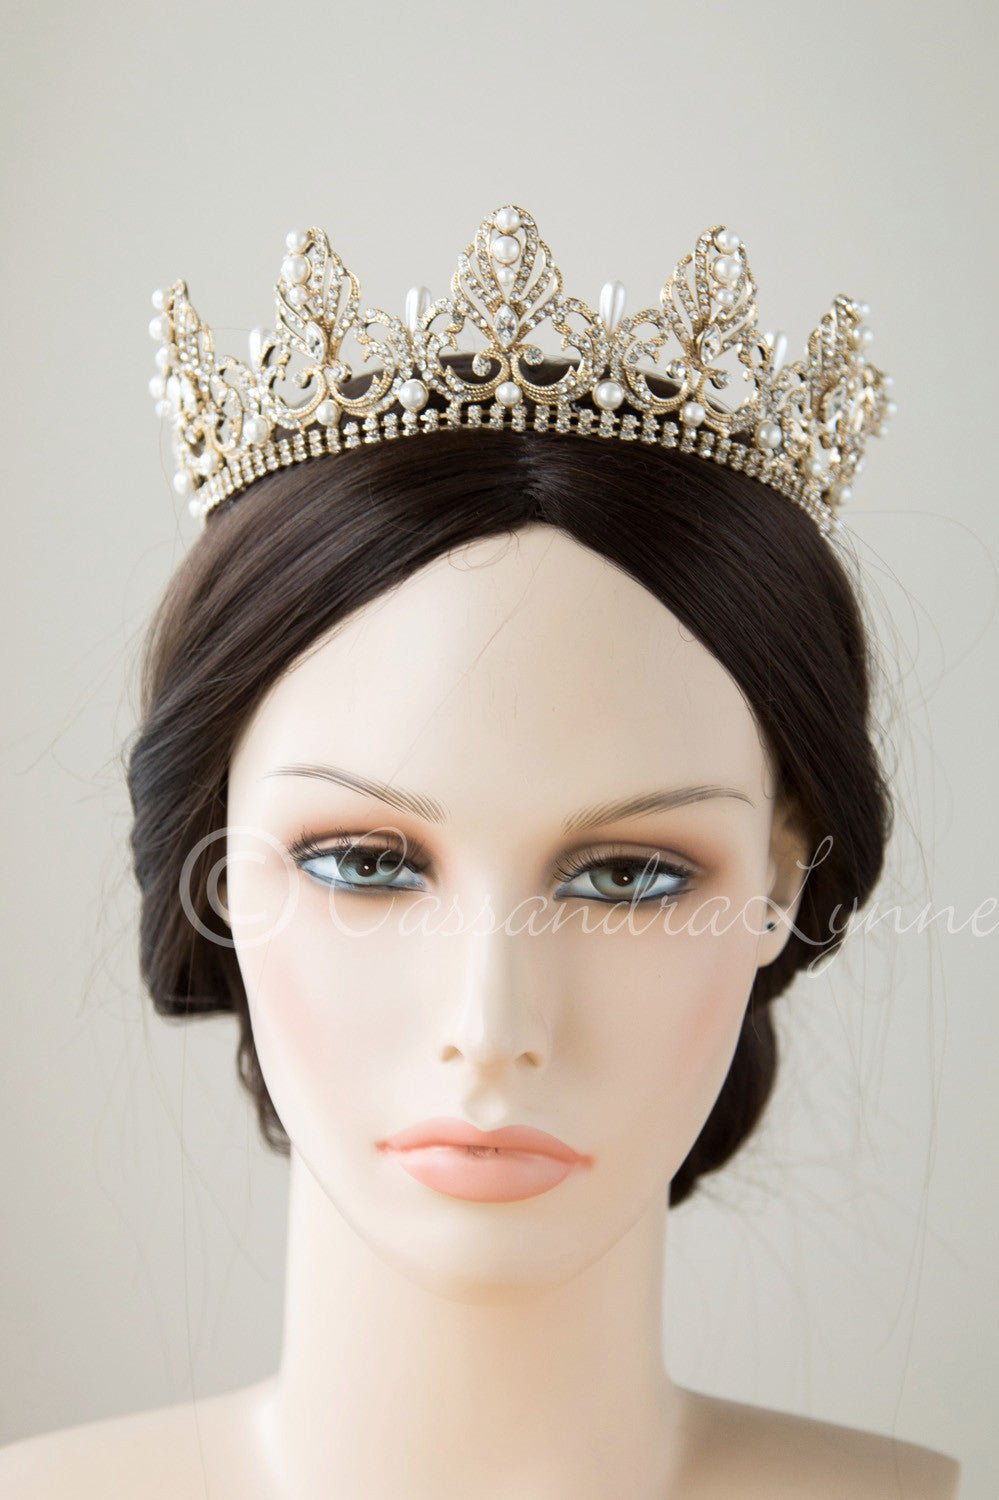 Full Circle Wedding Crown with Teardrop Pearls